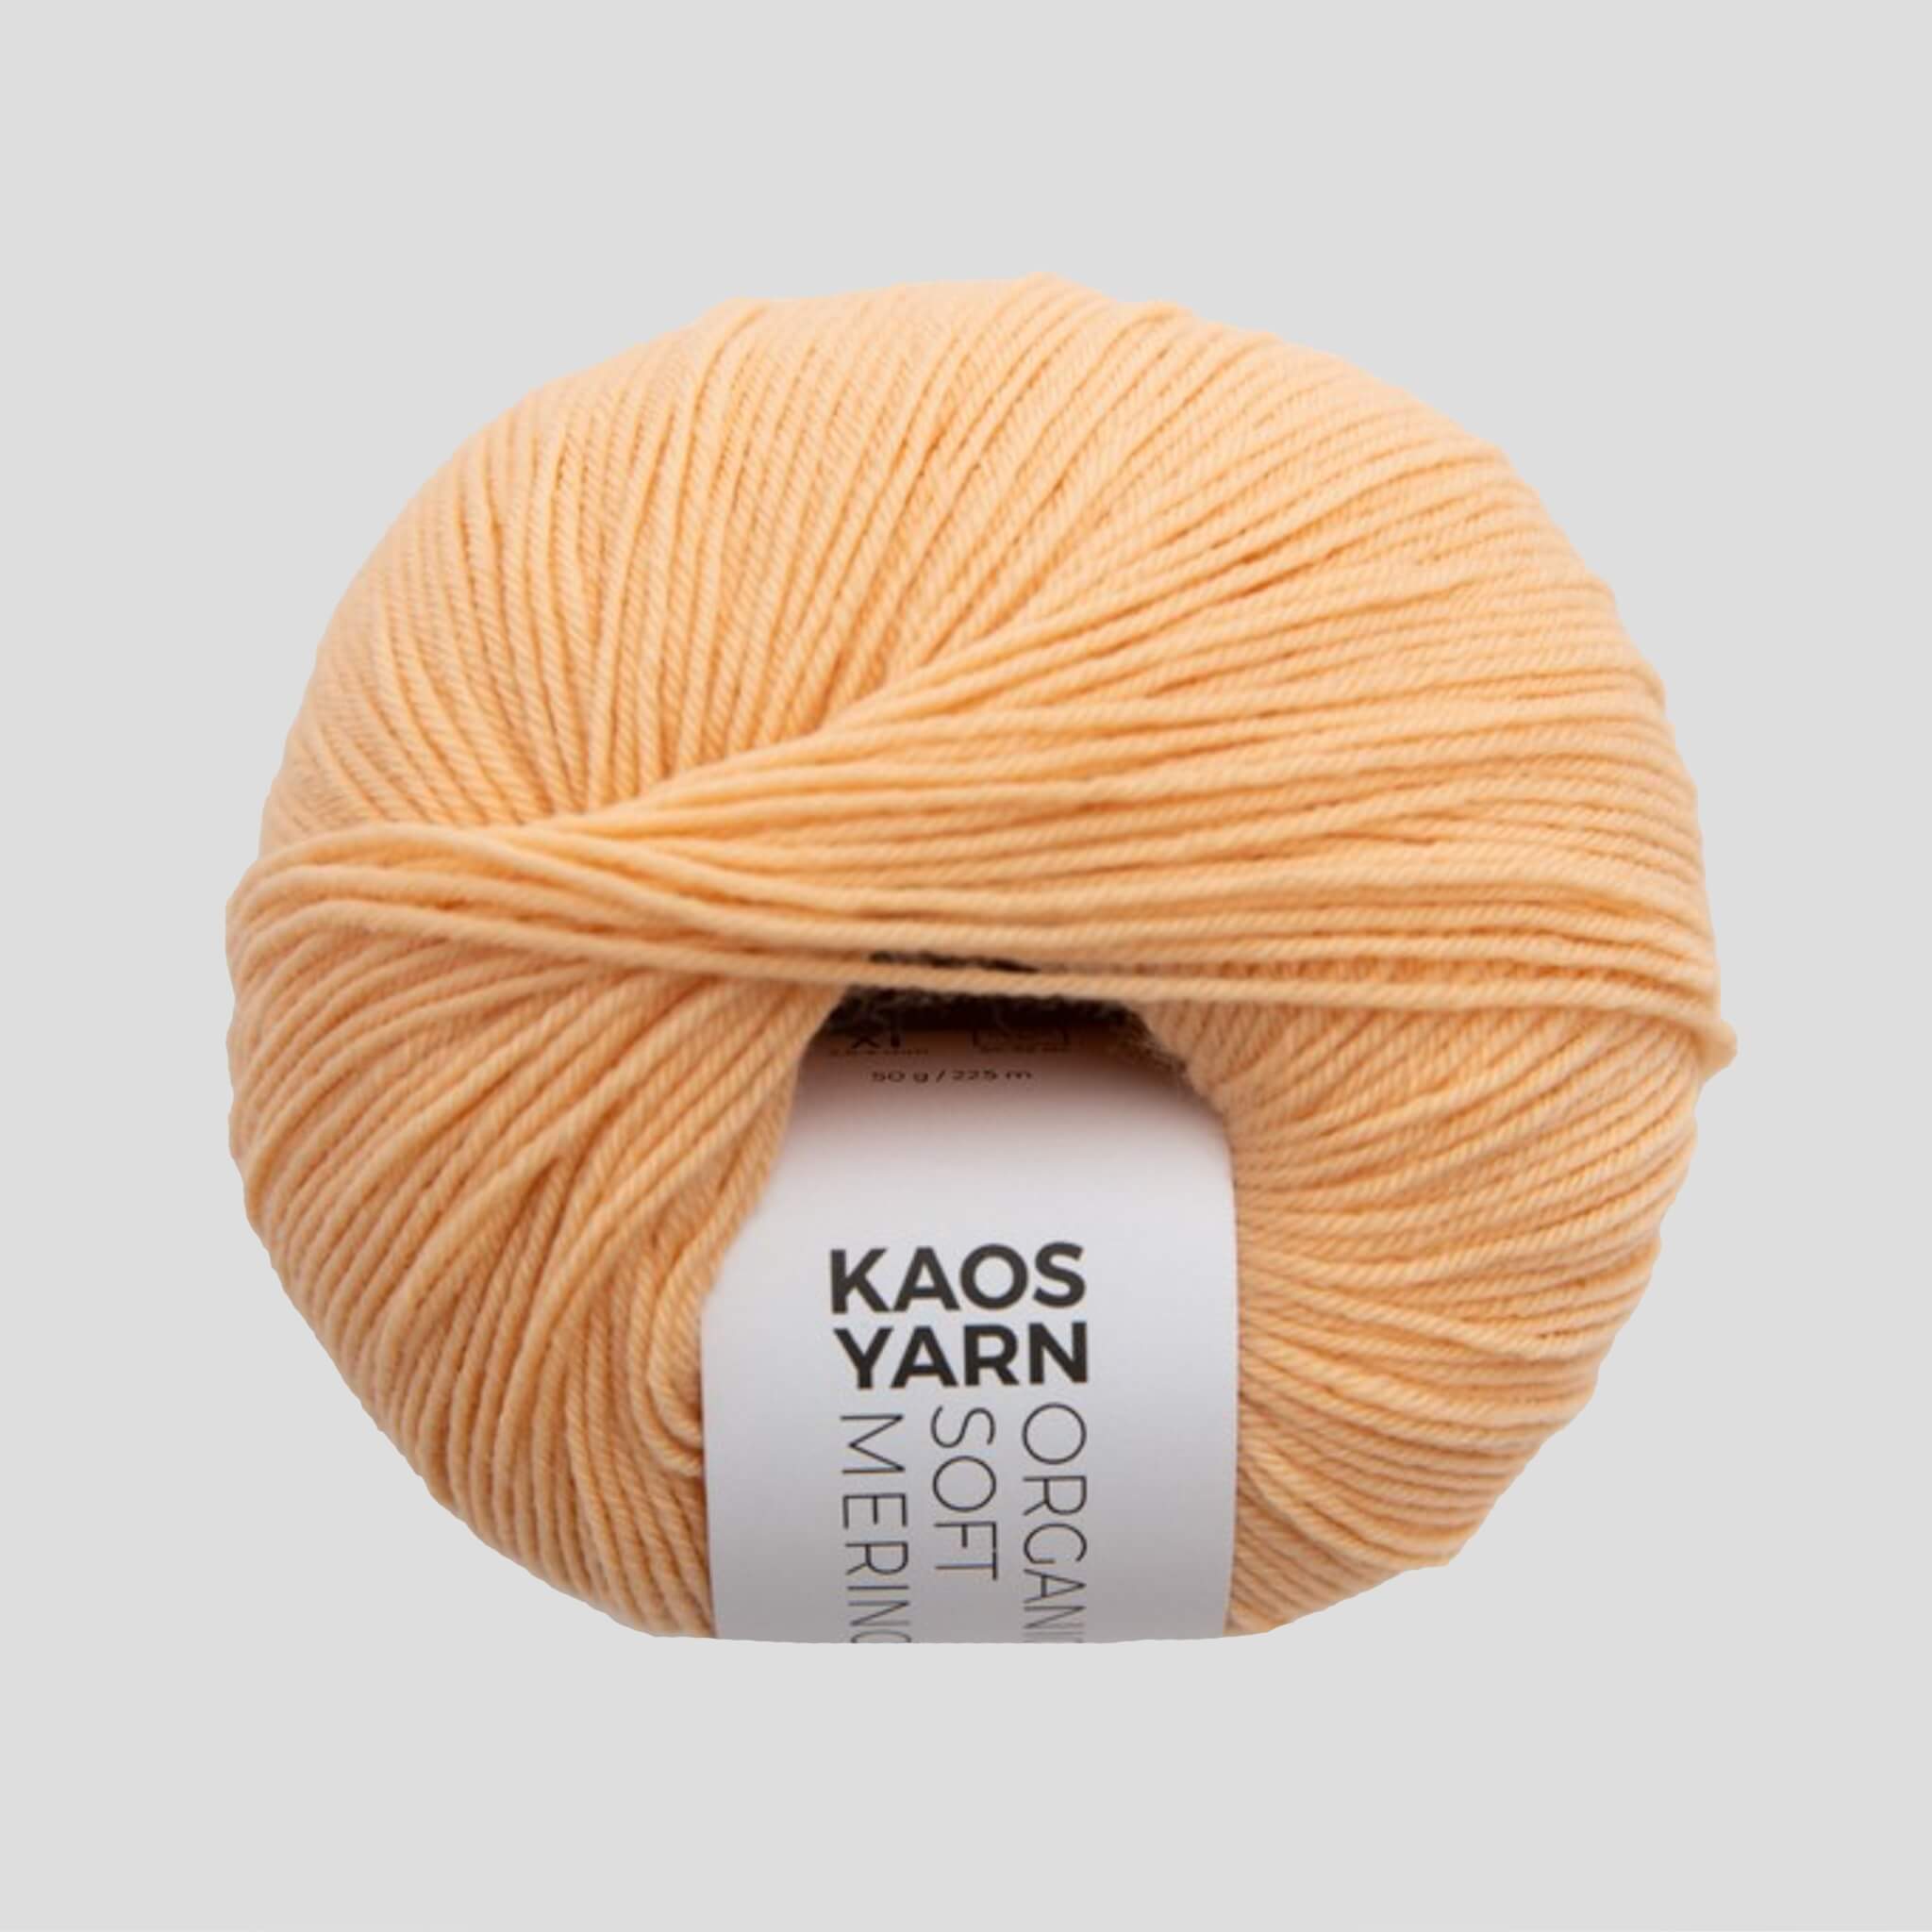 KAOS YARN I Organic Soft Merino, farve 1020 - Køb bæredygtigt garn fra Kaos Yarn